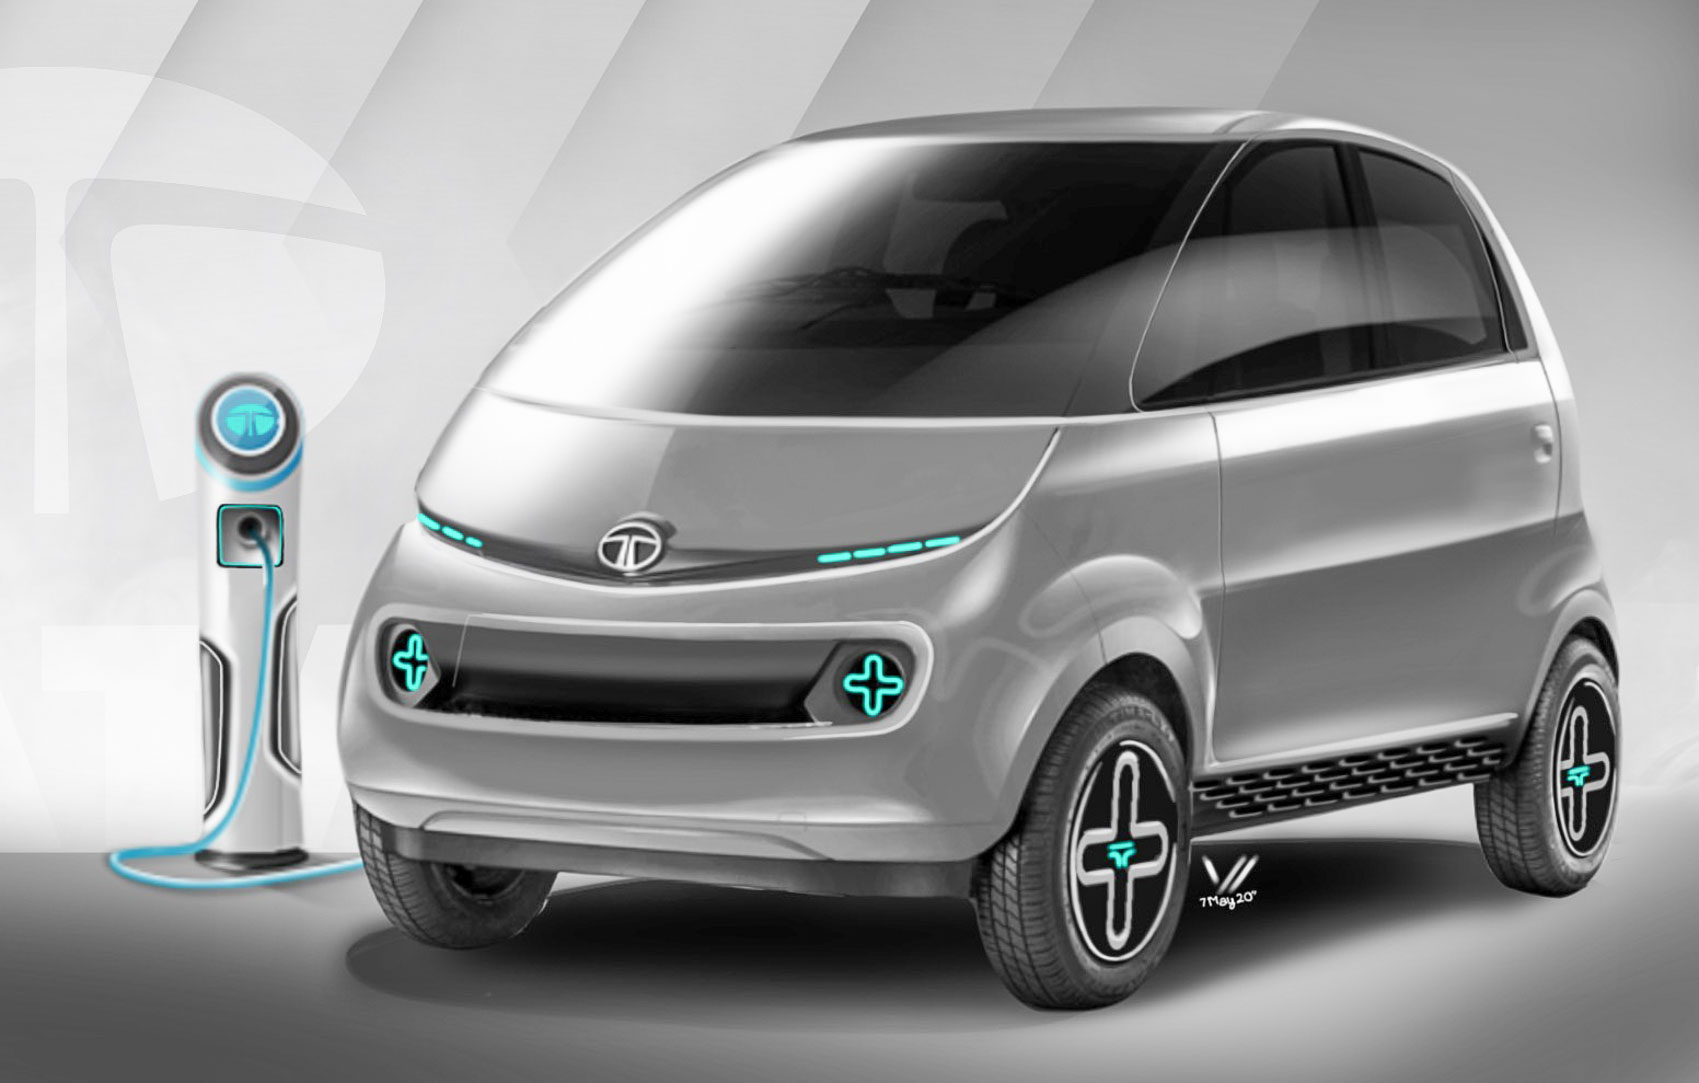 Tata Nano Electric Concept Shows How The Cutesy Car Can Have A Rebirth